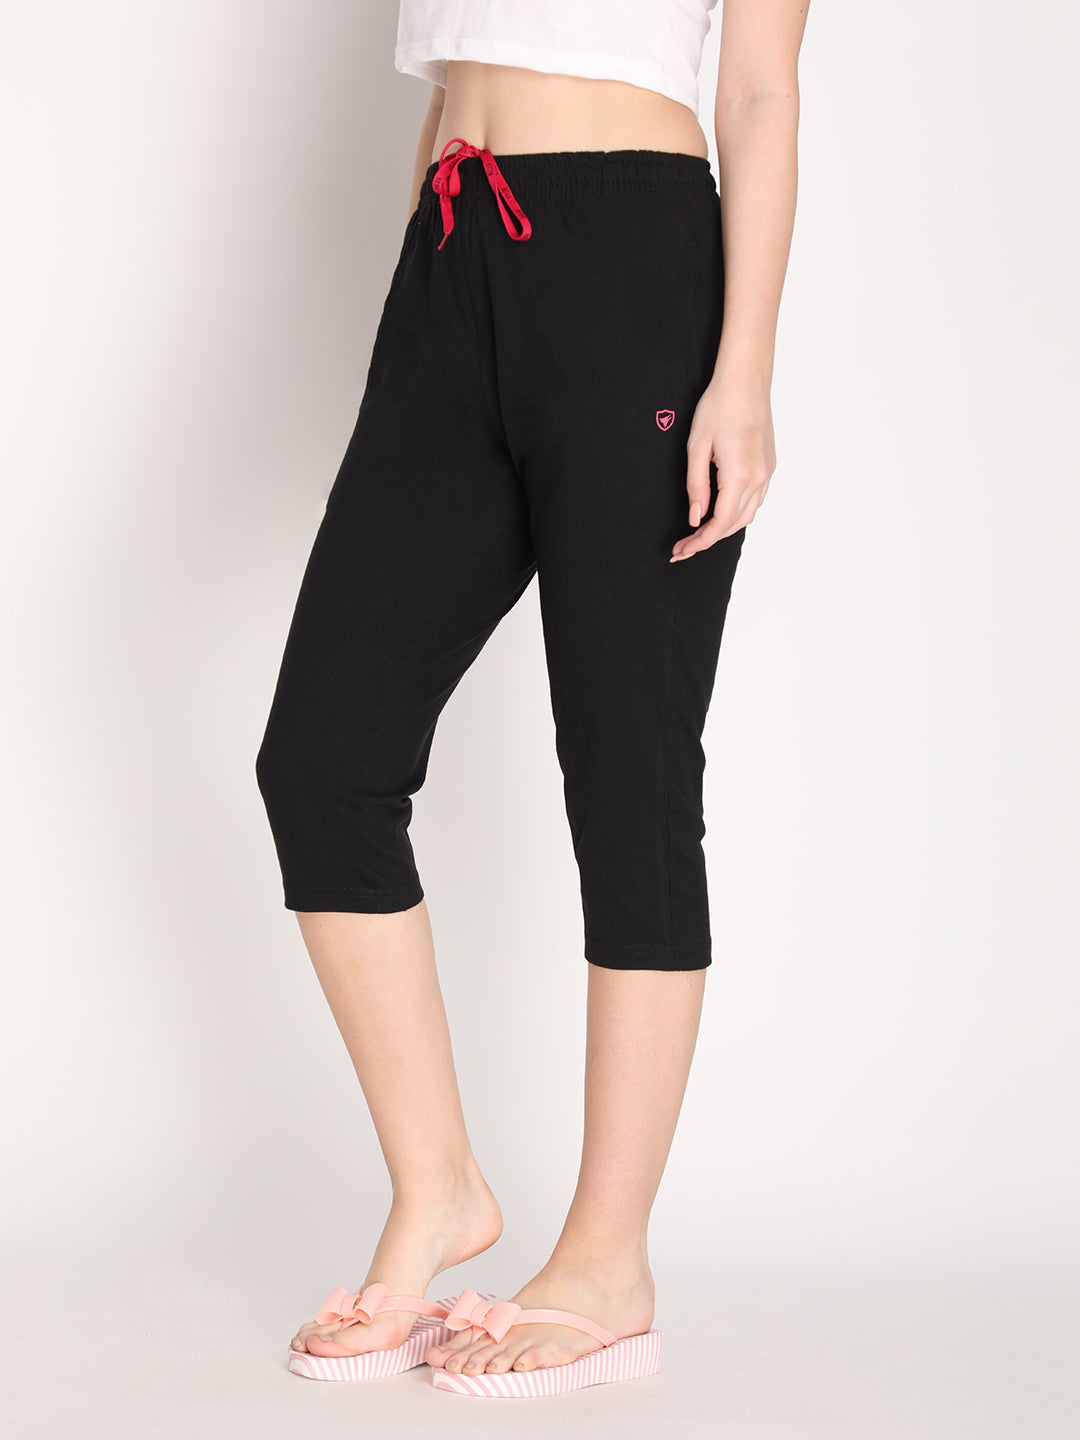 Cotton Capris For Women - Half Capri Pants - Black at Rs 750.00, Millar  Ganj, Ludhiana